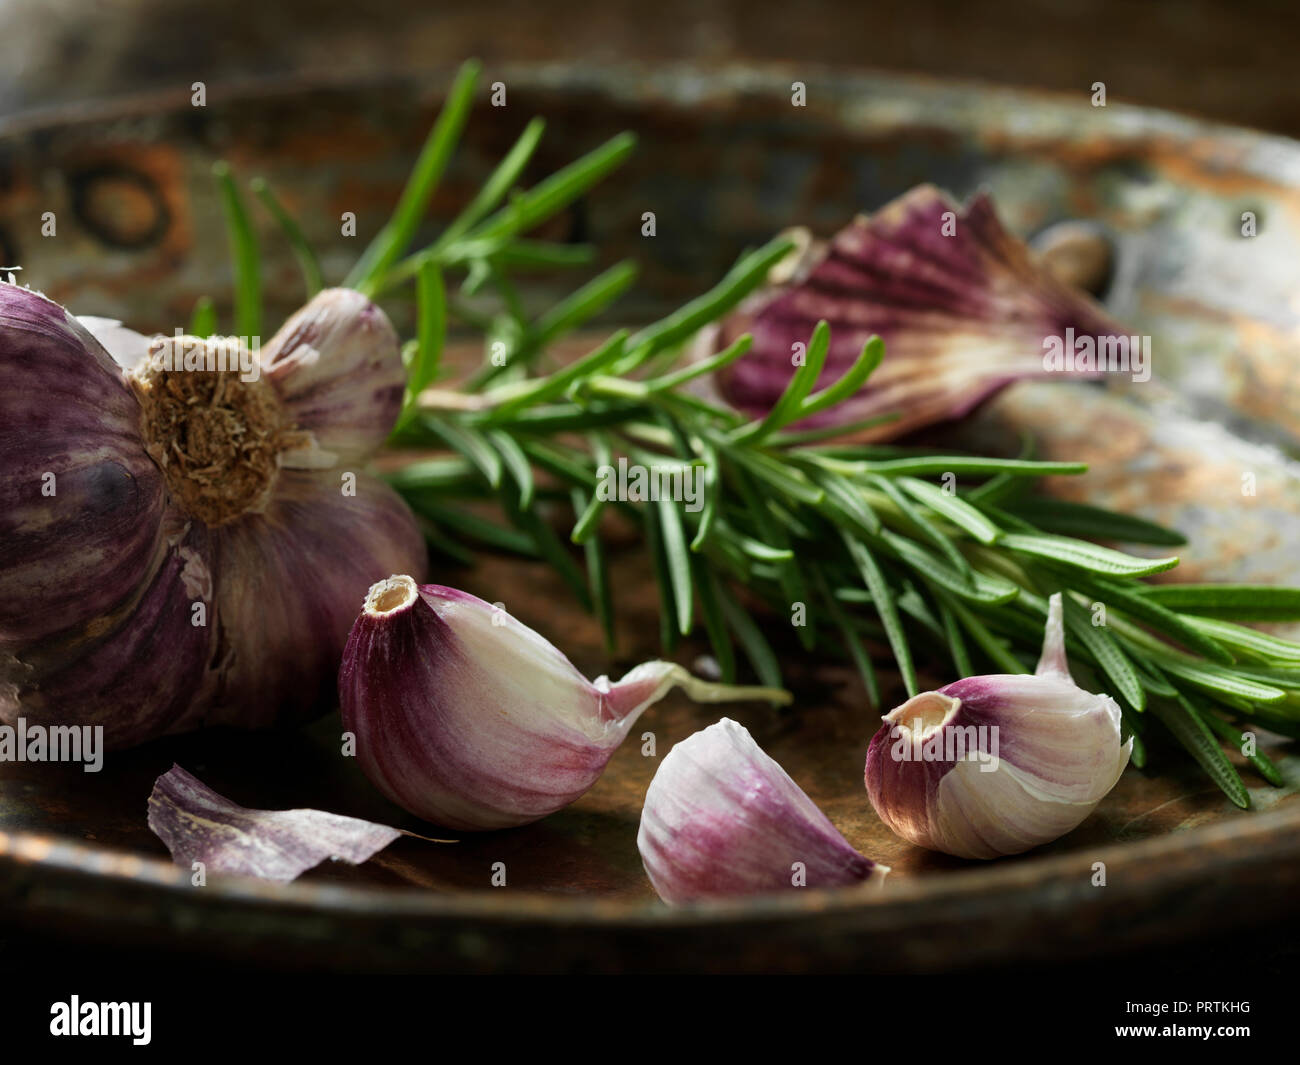 Garlic and rosemary Stock Photo